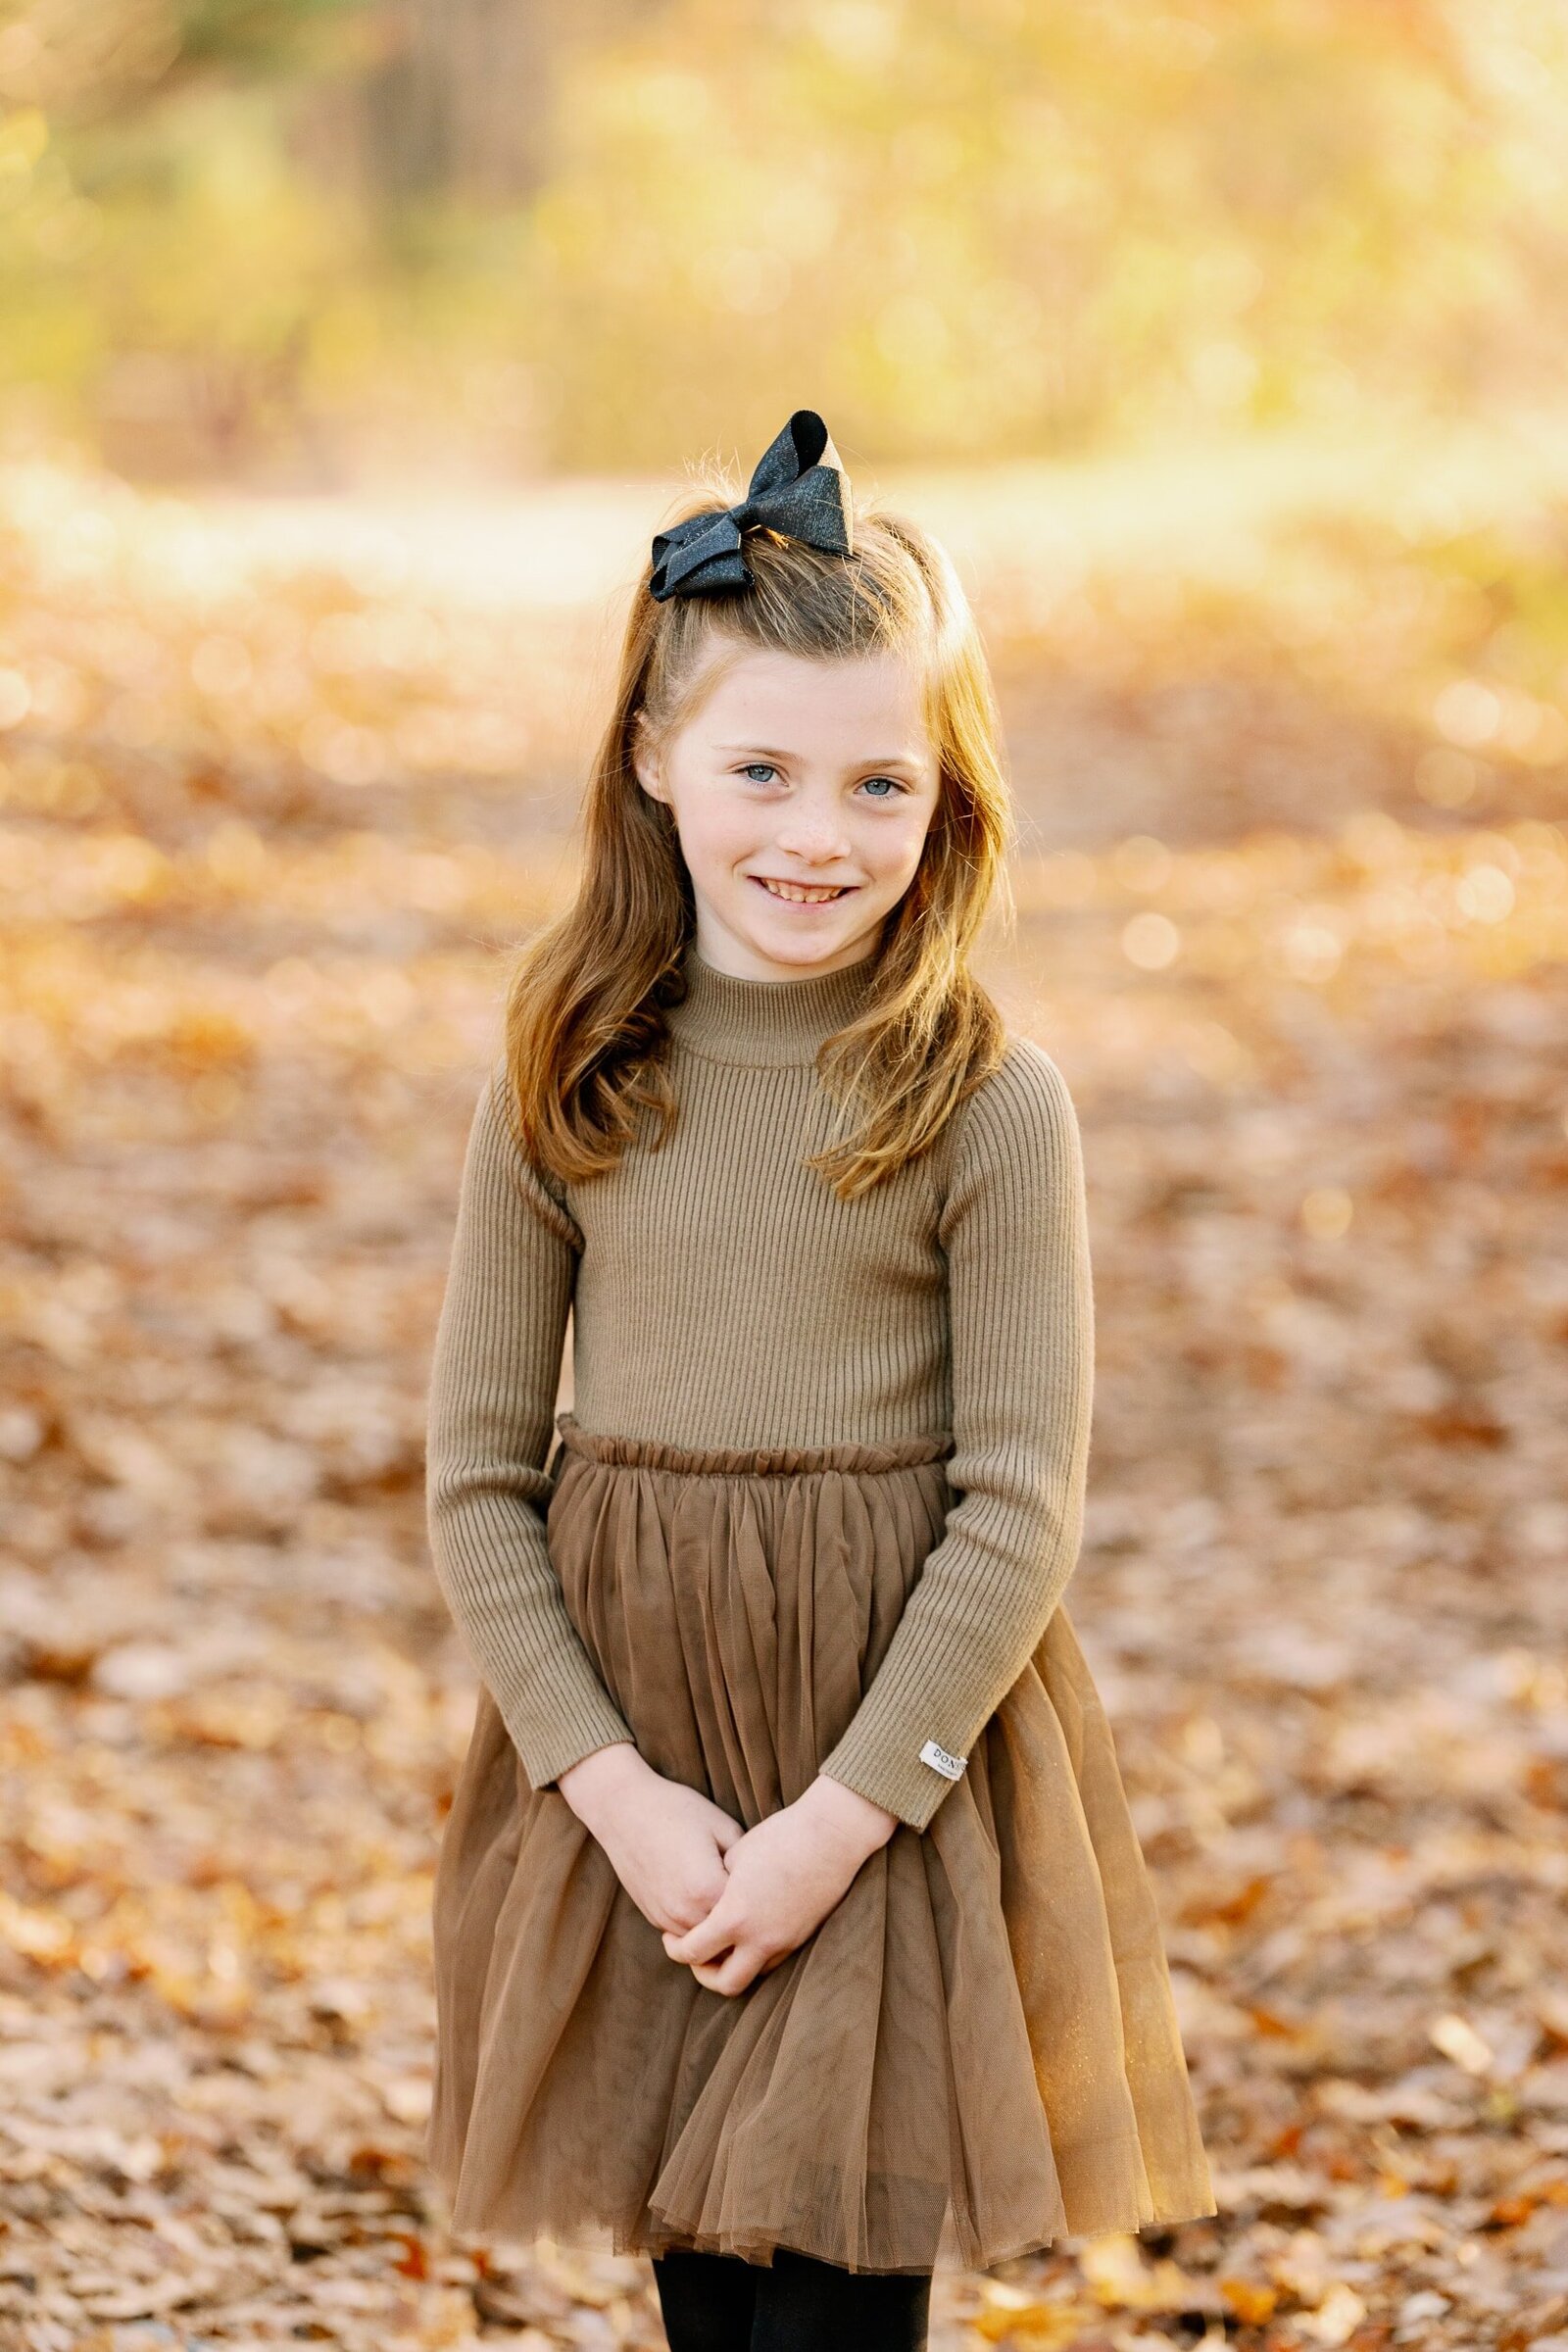 girl in brown dress smiling